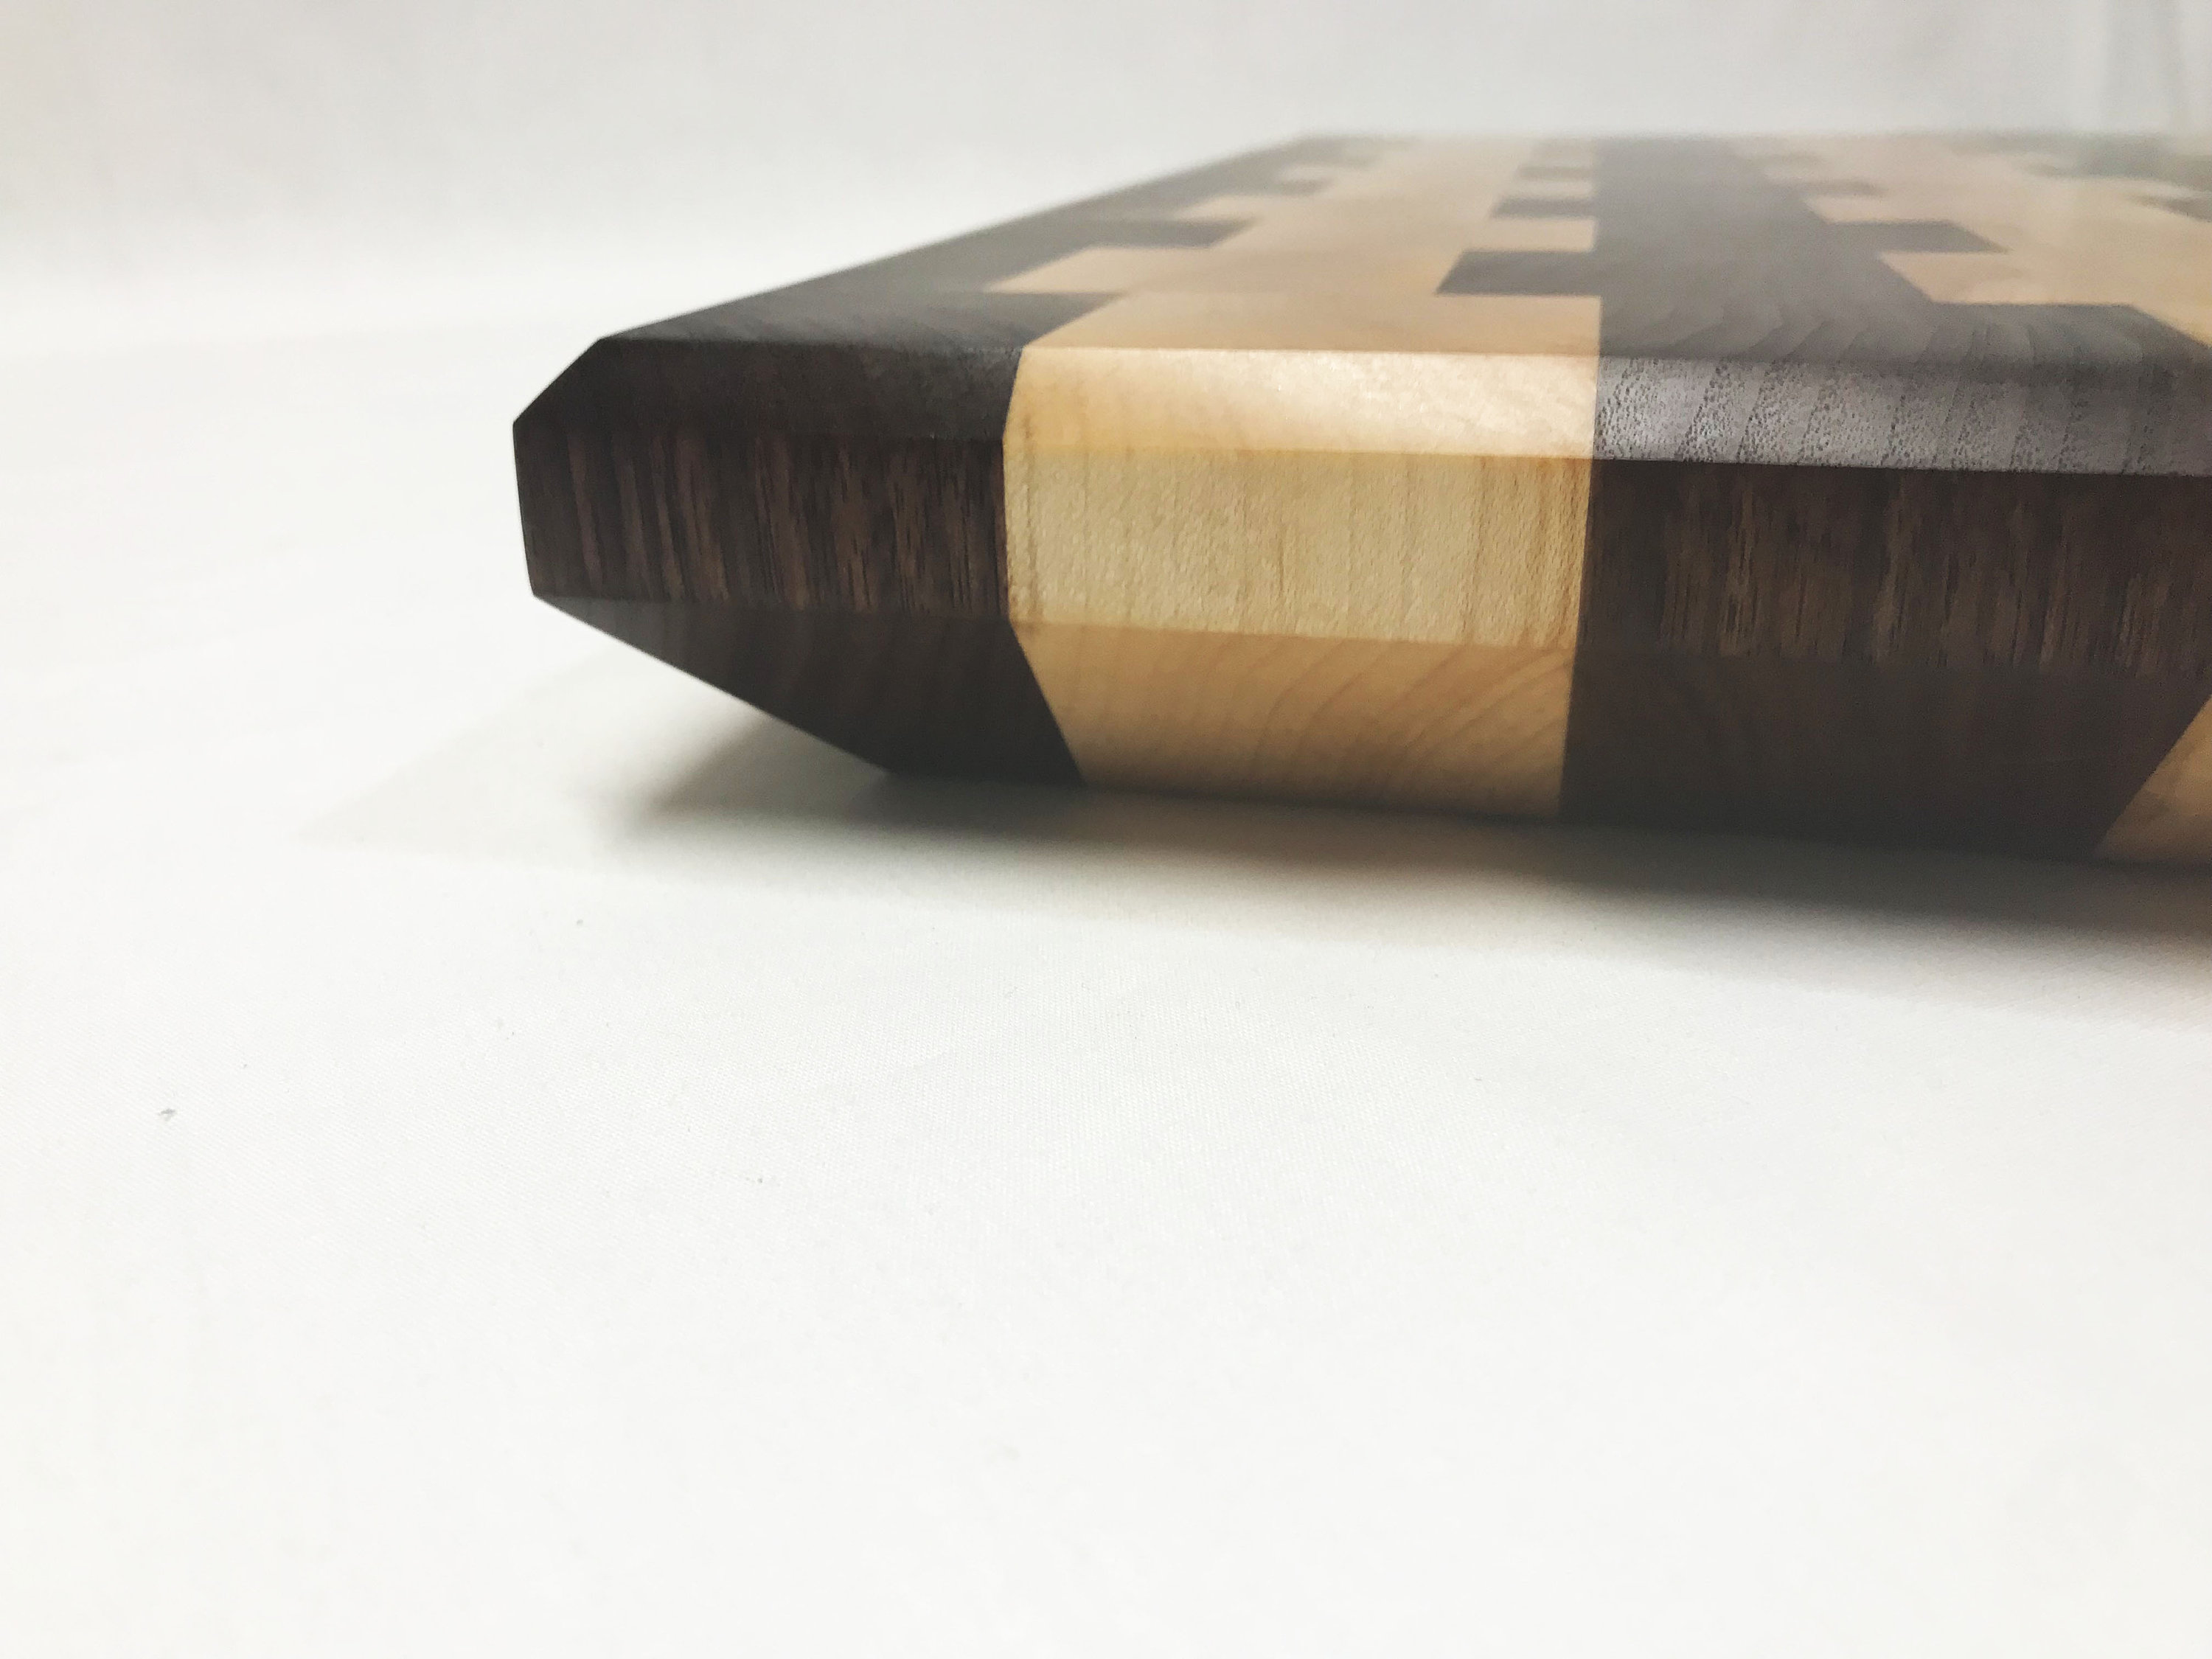 African Padauk and Maple wood end grain cutting board. 15” x 12” x 1.25”